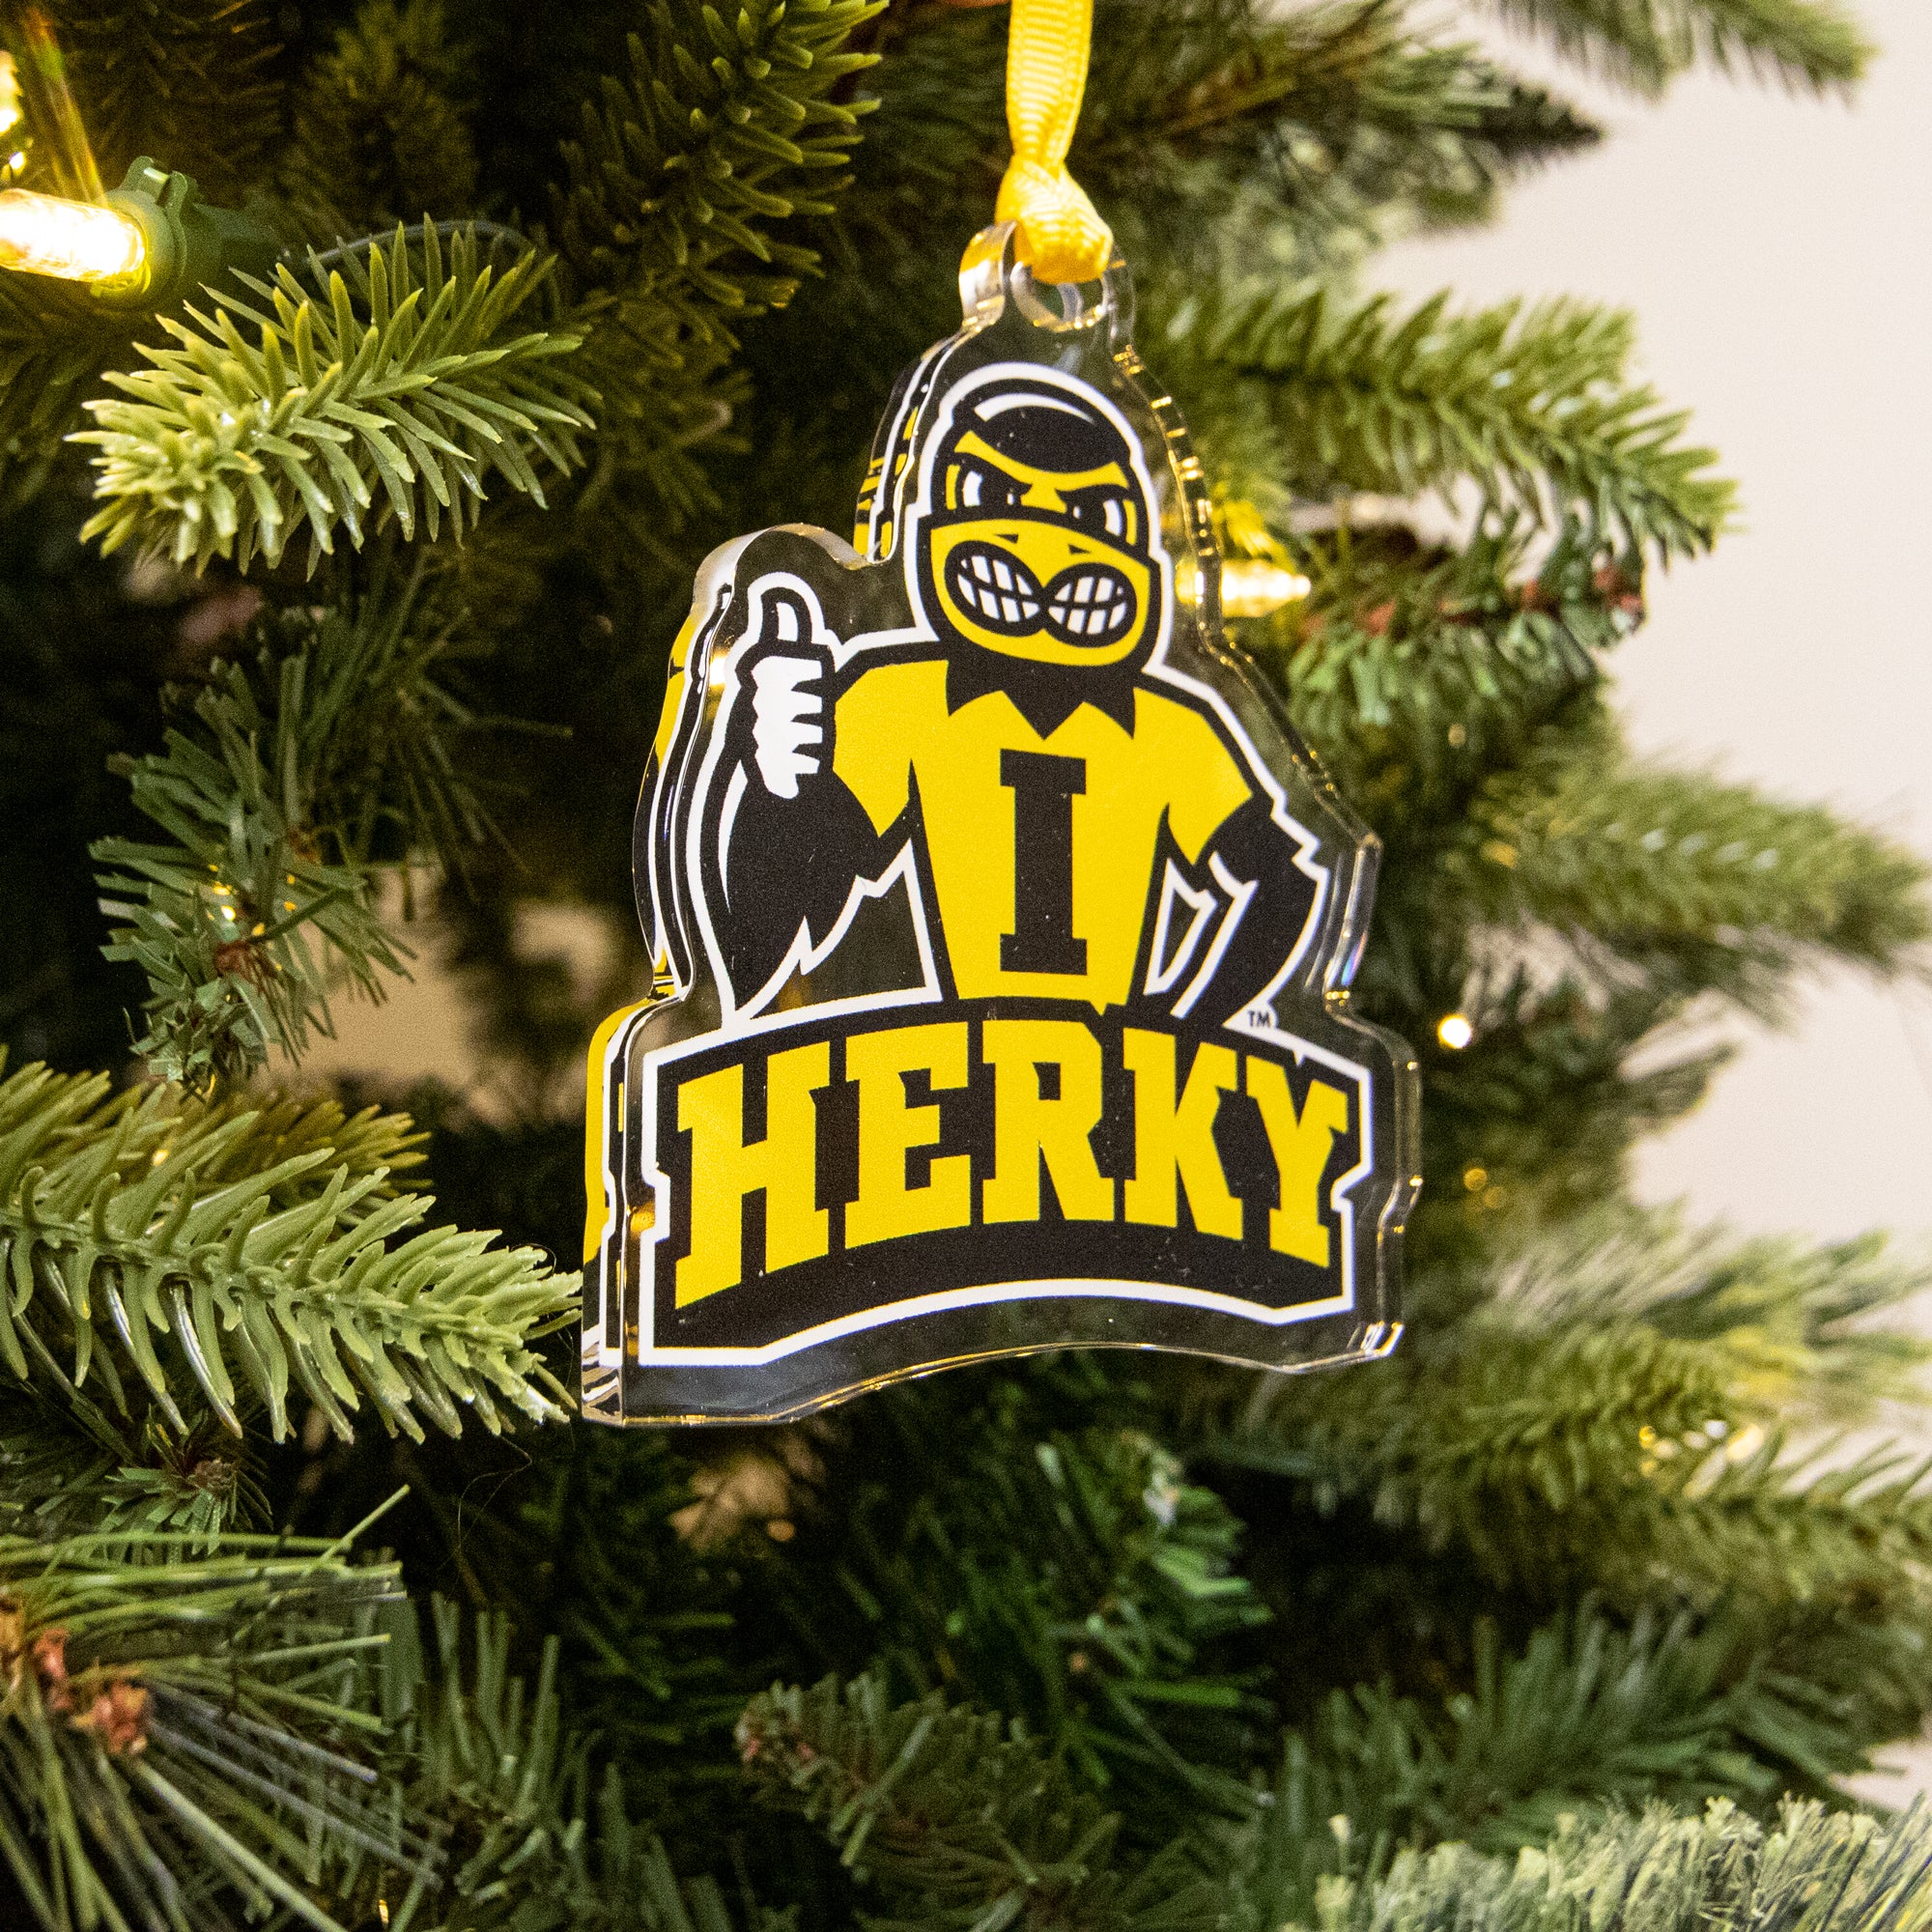 Iowa Hawkeyes - Herky Dimensional Bag Tag & Ornament